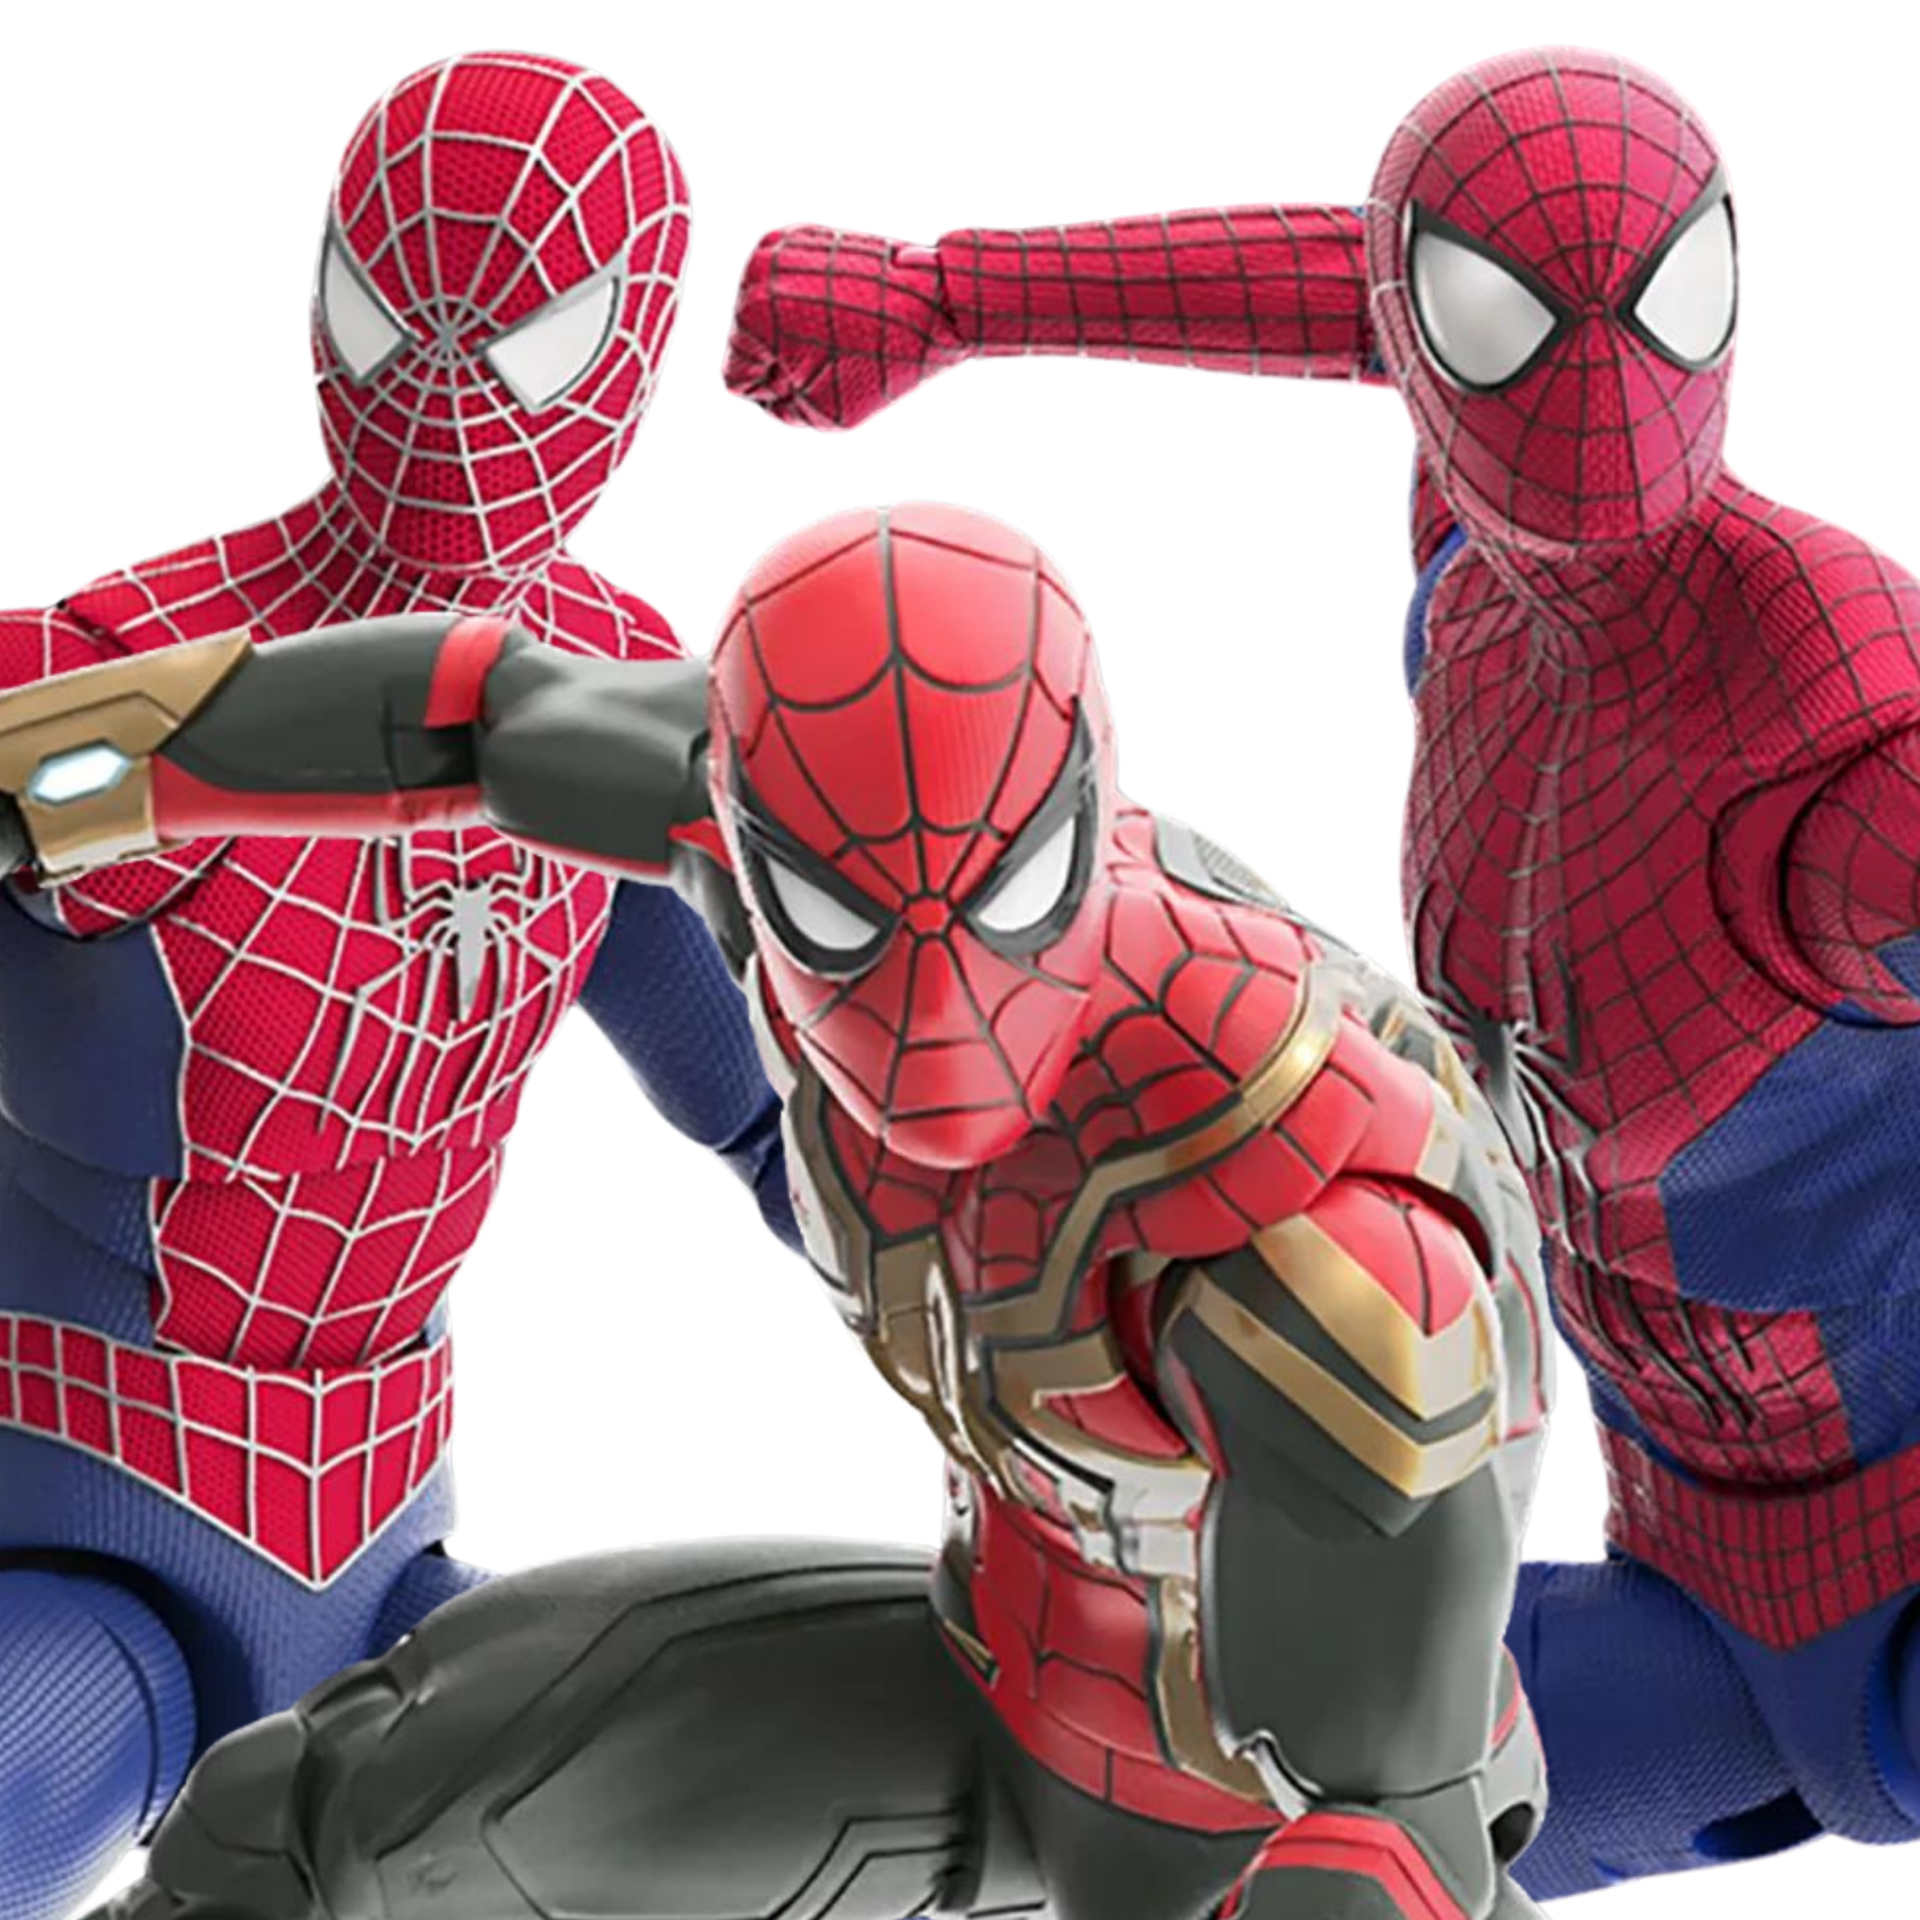 Marvel Legends Spider-Man No Way Home: Spider-Man 3 Pack (3'lü Paket) Aksiyon Figür (Exclusive) - Tobey Maguire, Andrew Garfield, Tom Holland